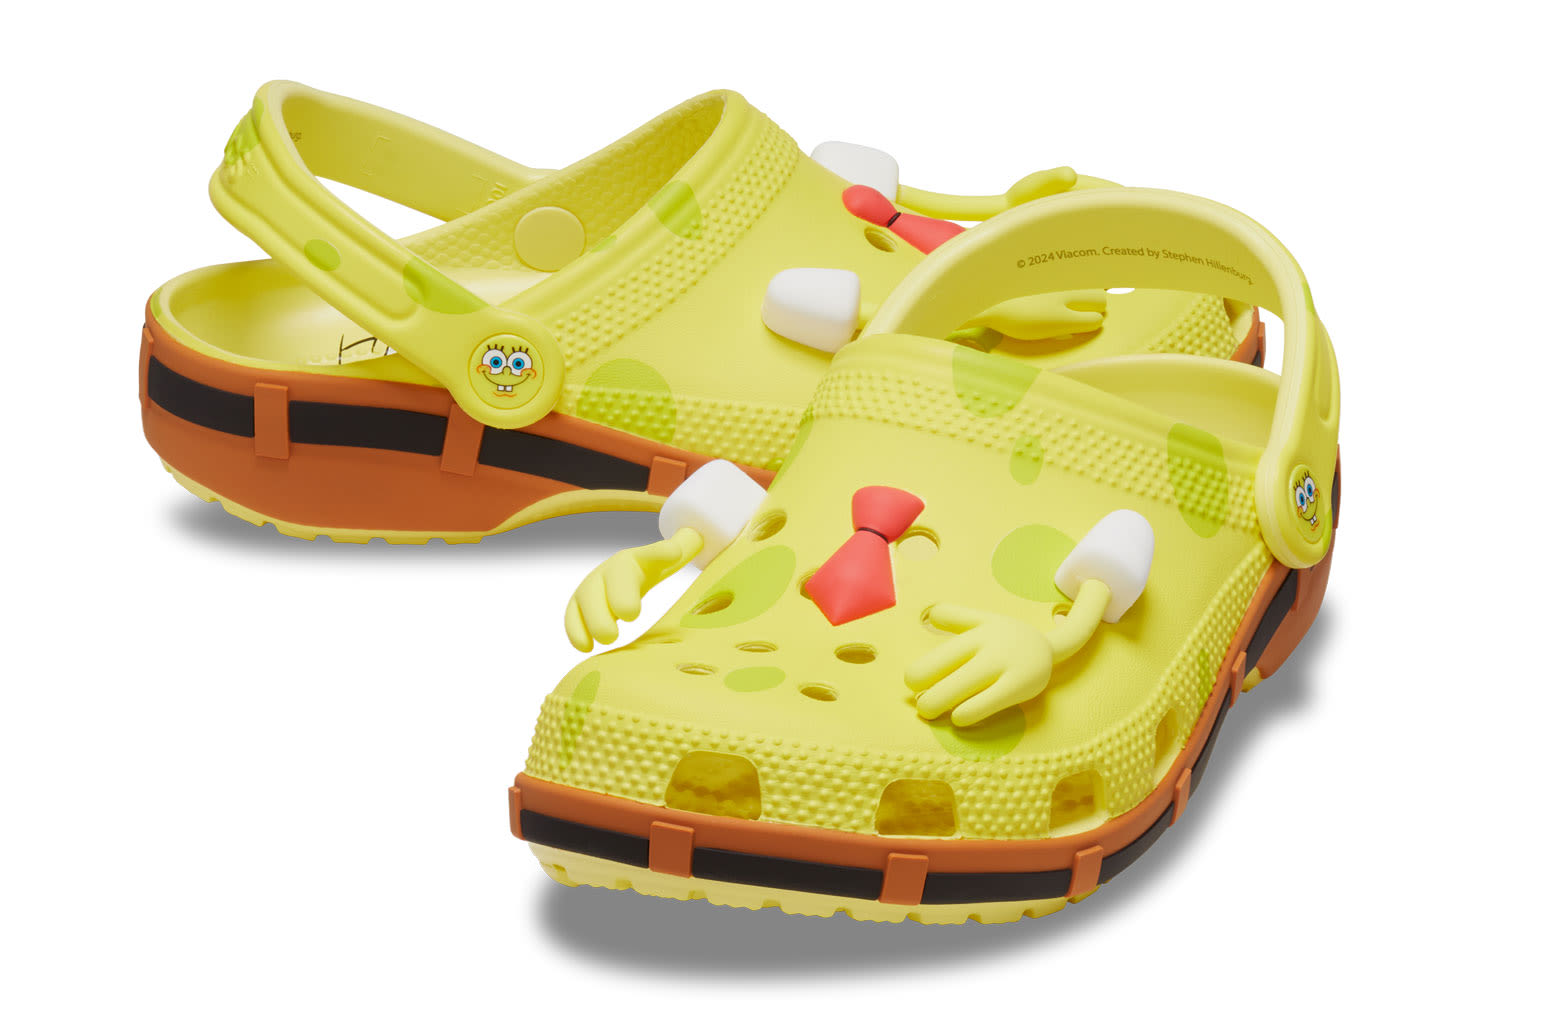 Crocs Brings Bikini Bottom to Your Feet With New SpongeBob Squarepants Collection